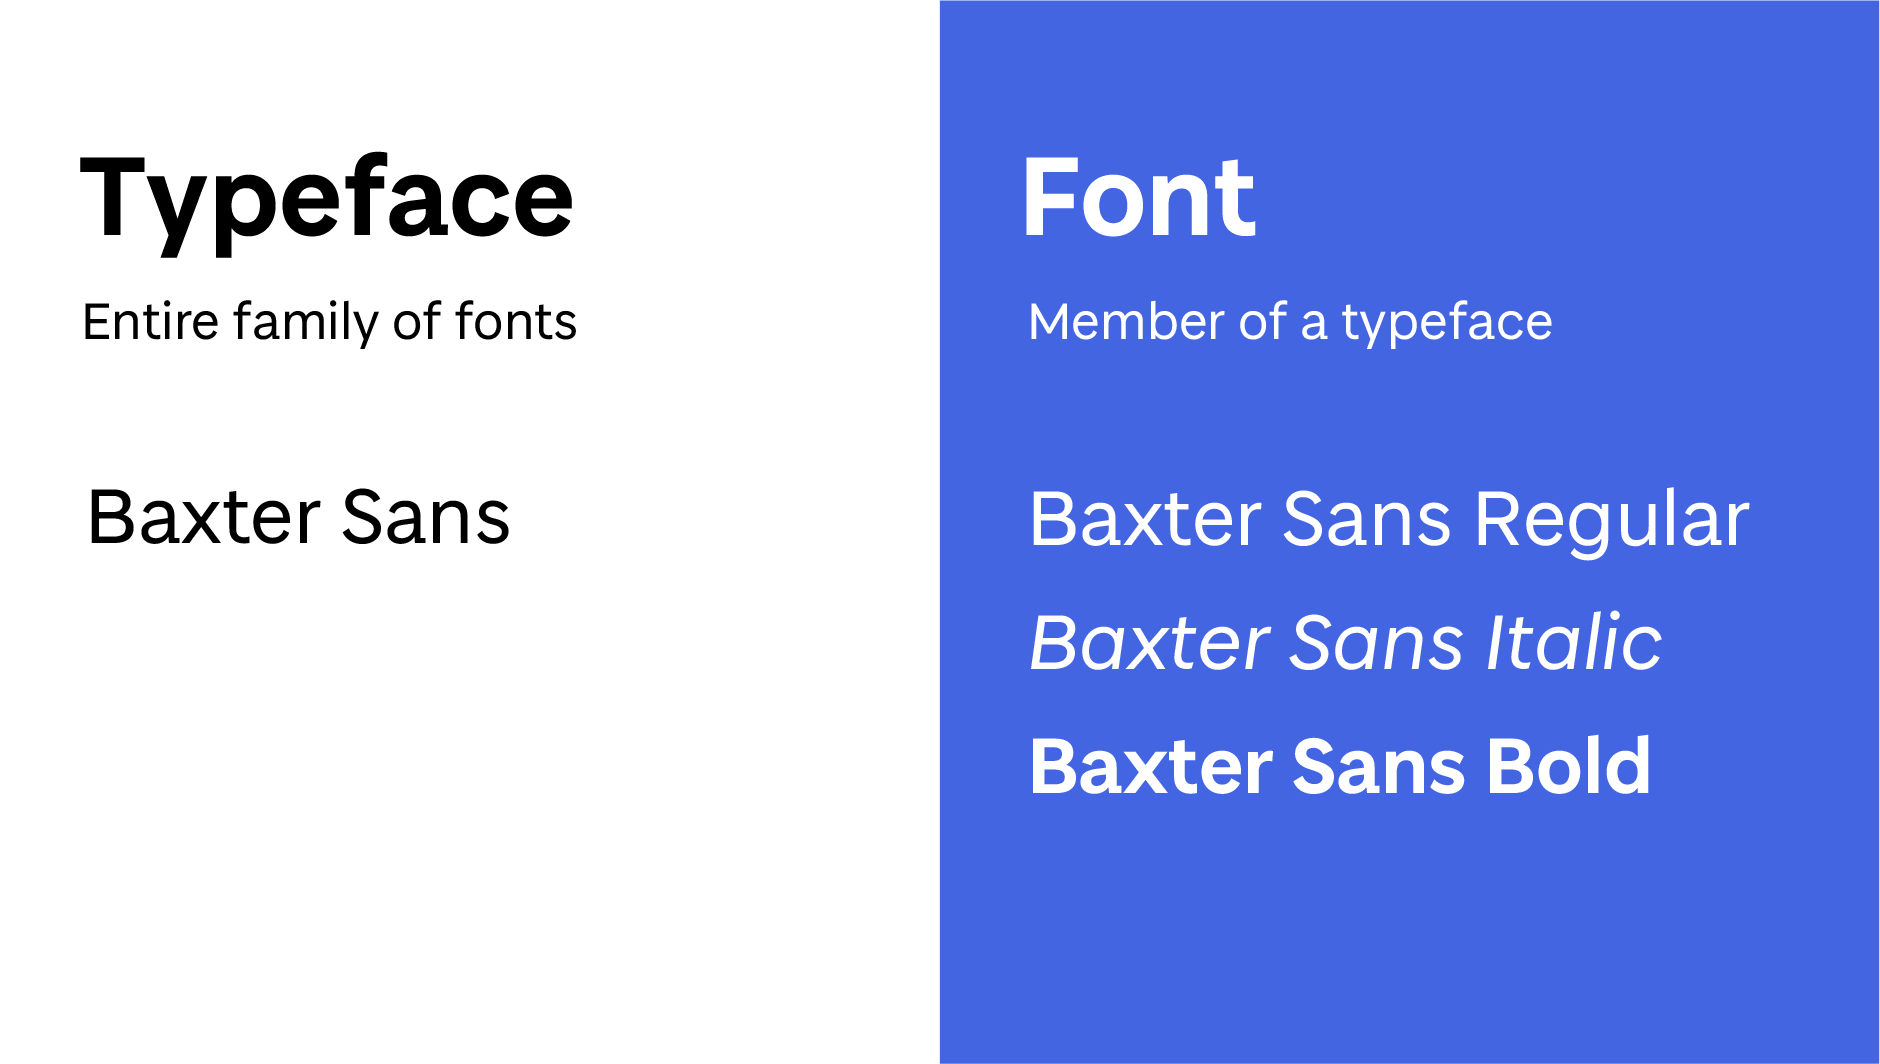 The typeface Baxter Sans alongside the fonts Baxter Sans Regular, Baxter Sans Italic and Baxter Sans Bold